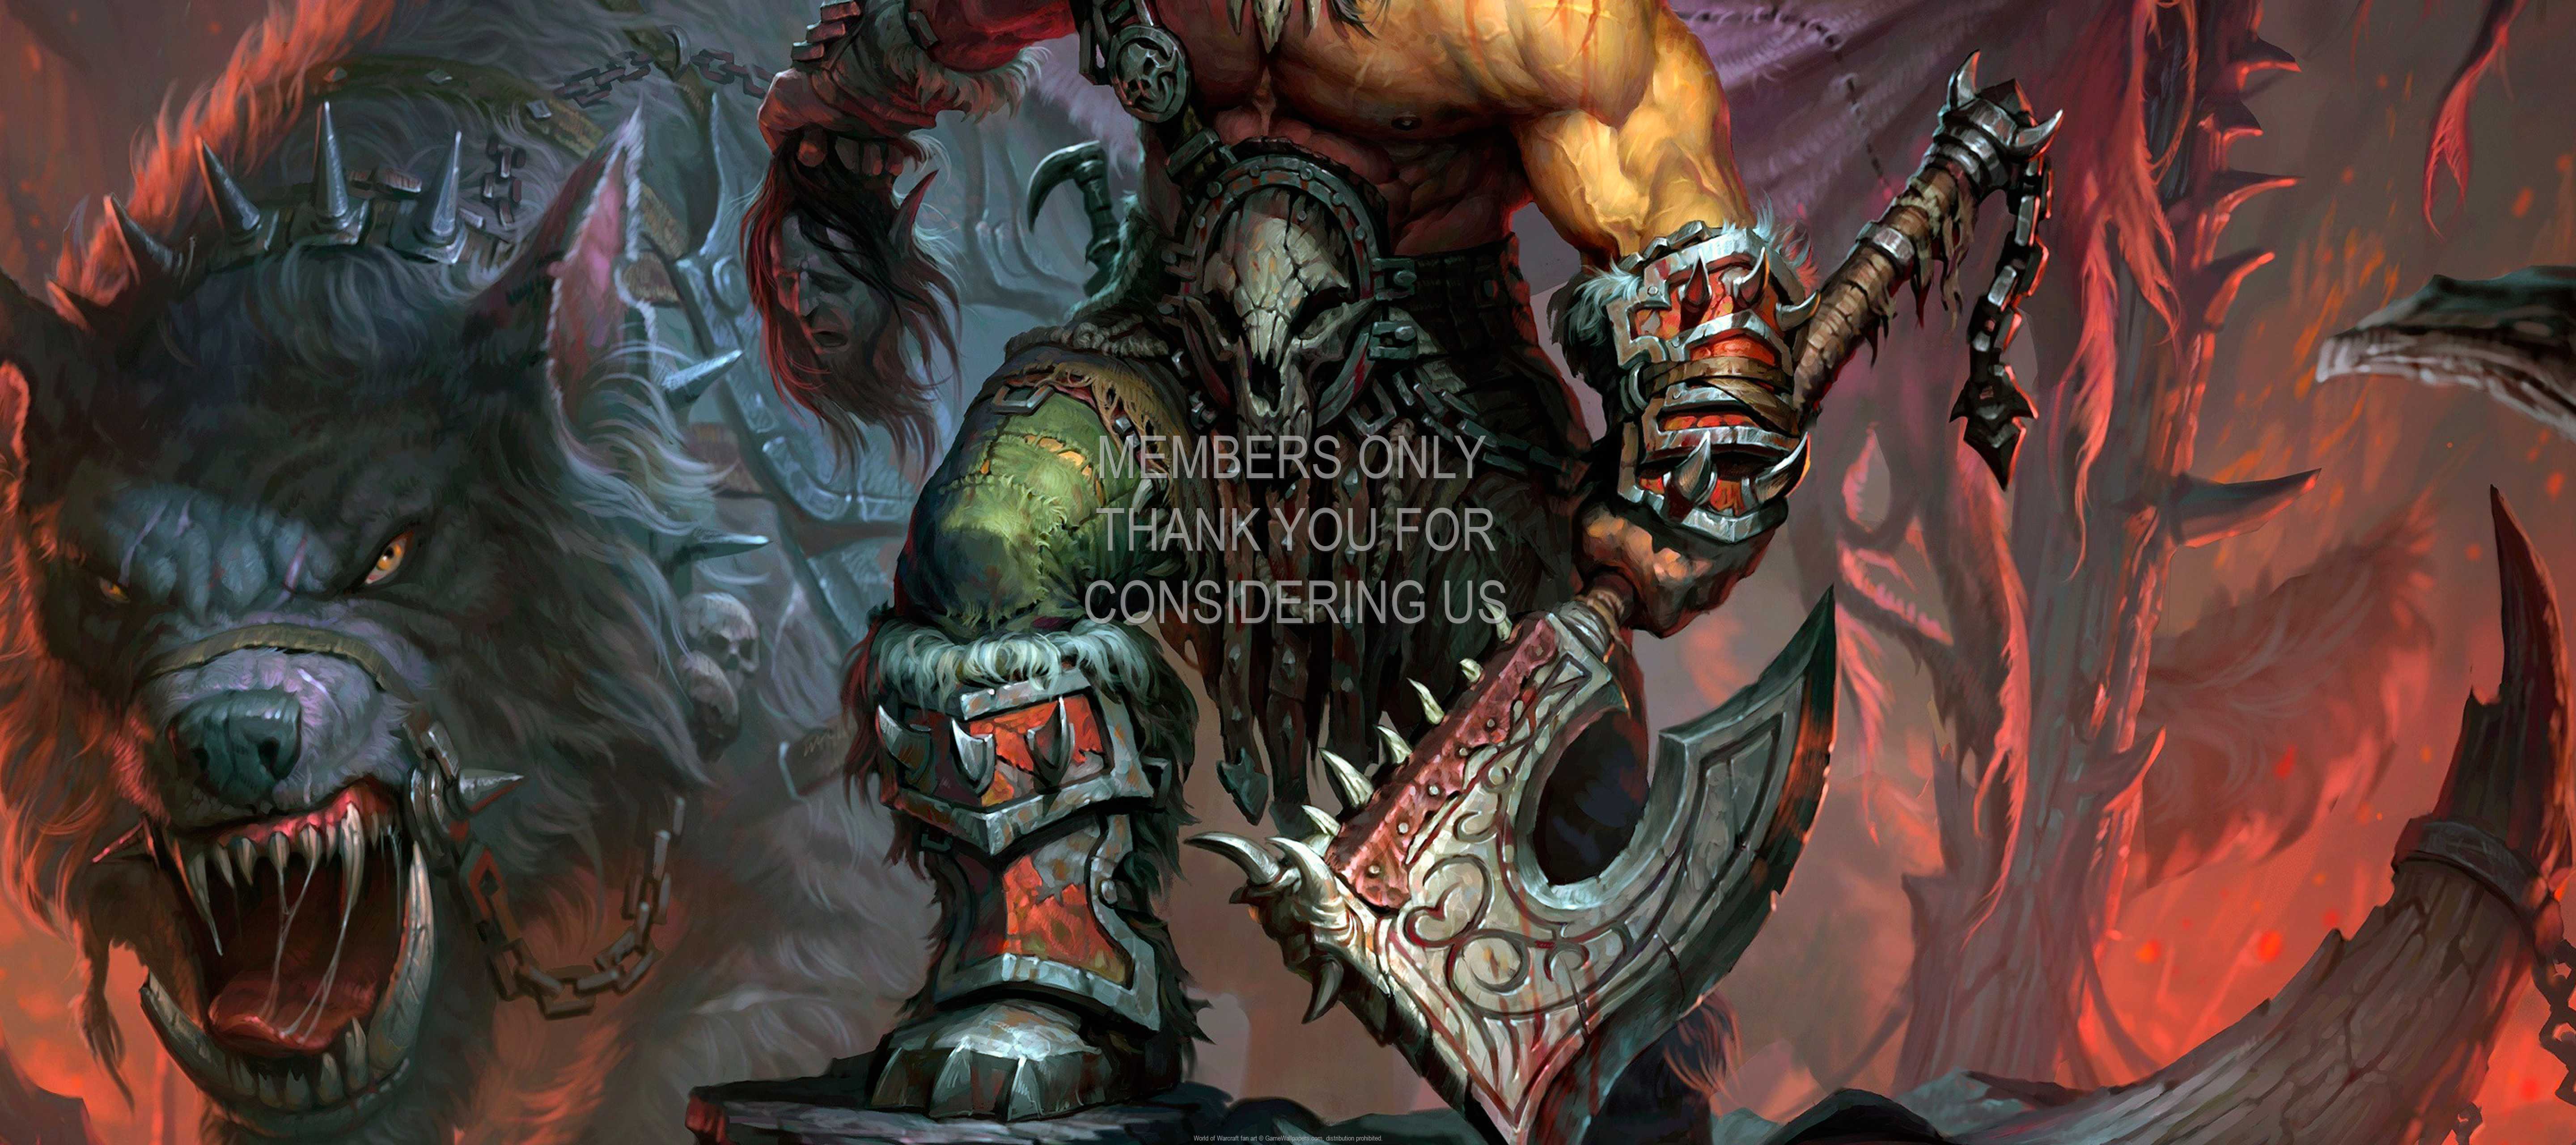 World of Warcraft fan art 1440p%20Horizontal Mobile wallpaper or background 01